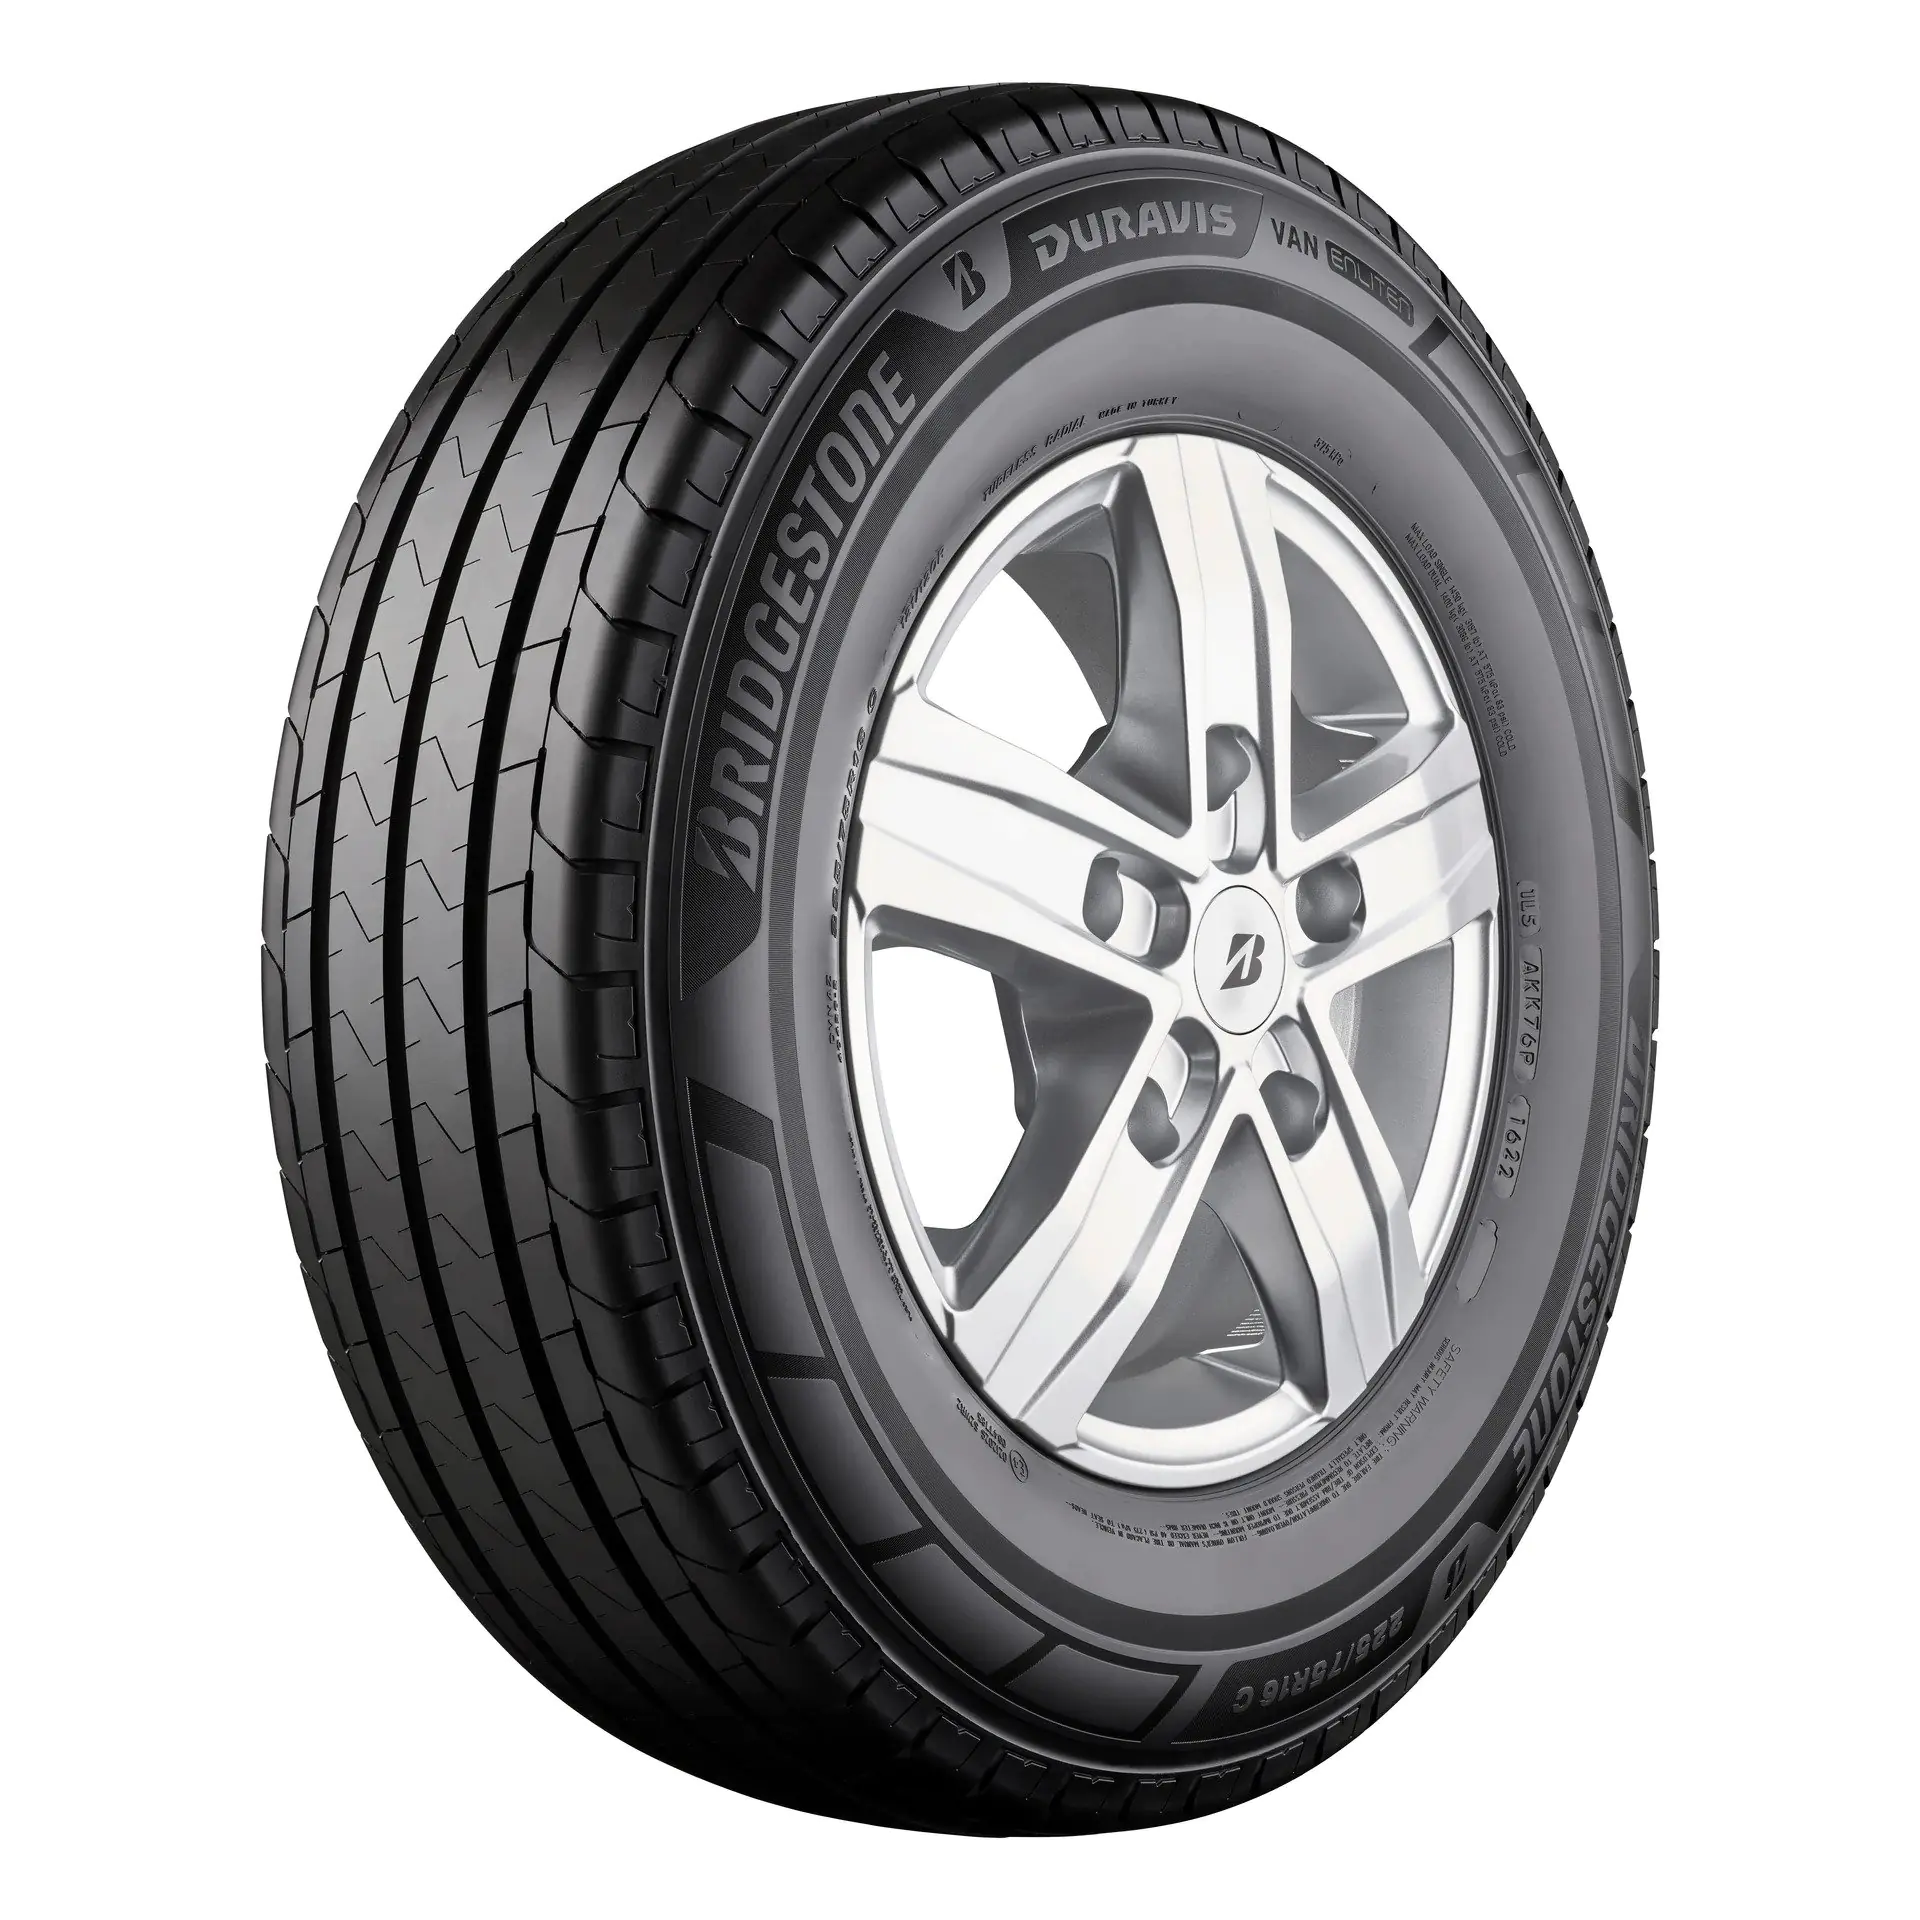 Bridgestone Bridgestone 215/75 R16C 113/111R DURAVIS VAN pneumatici nuovi Estivo 